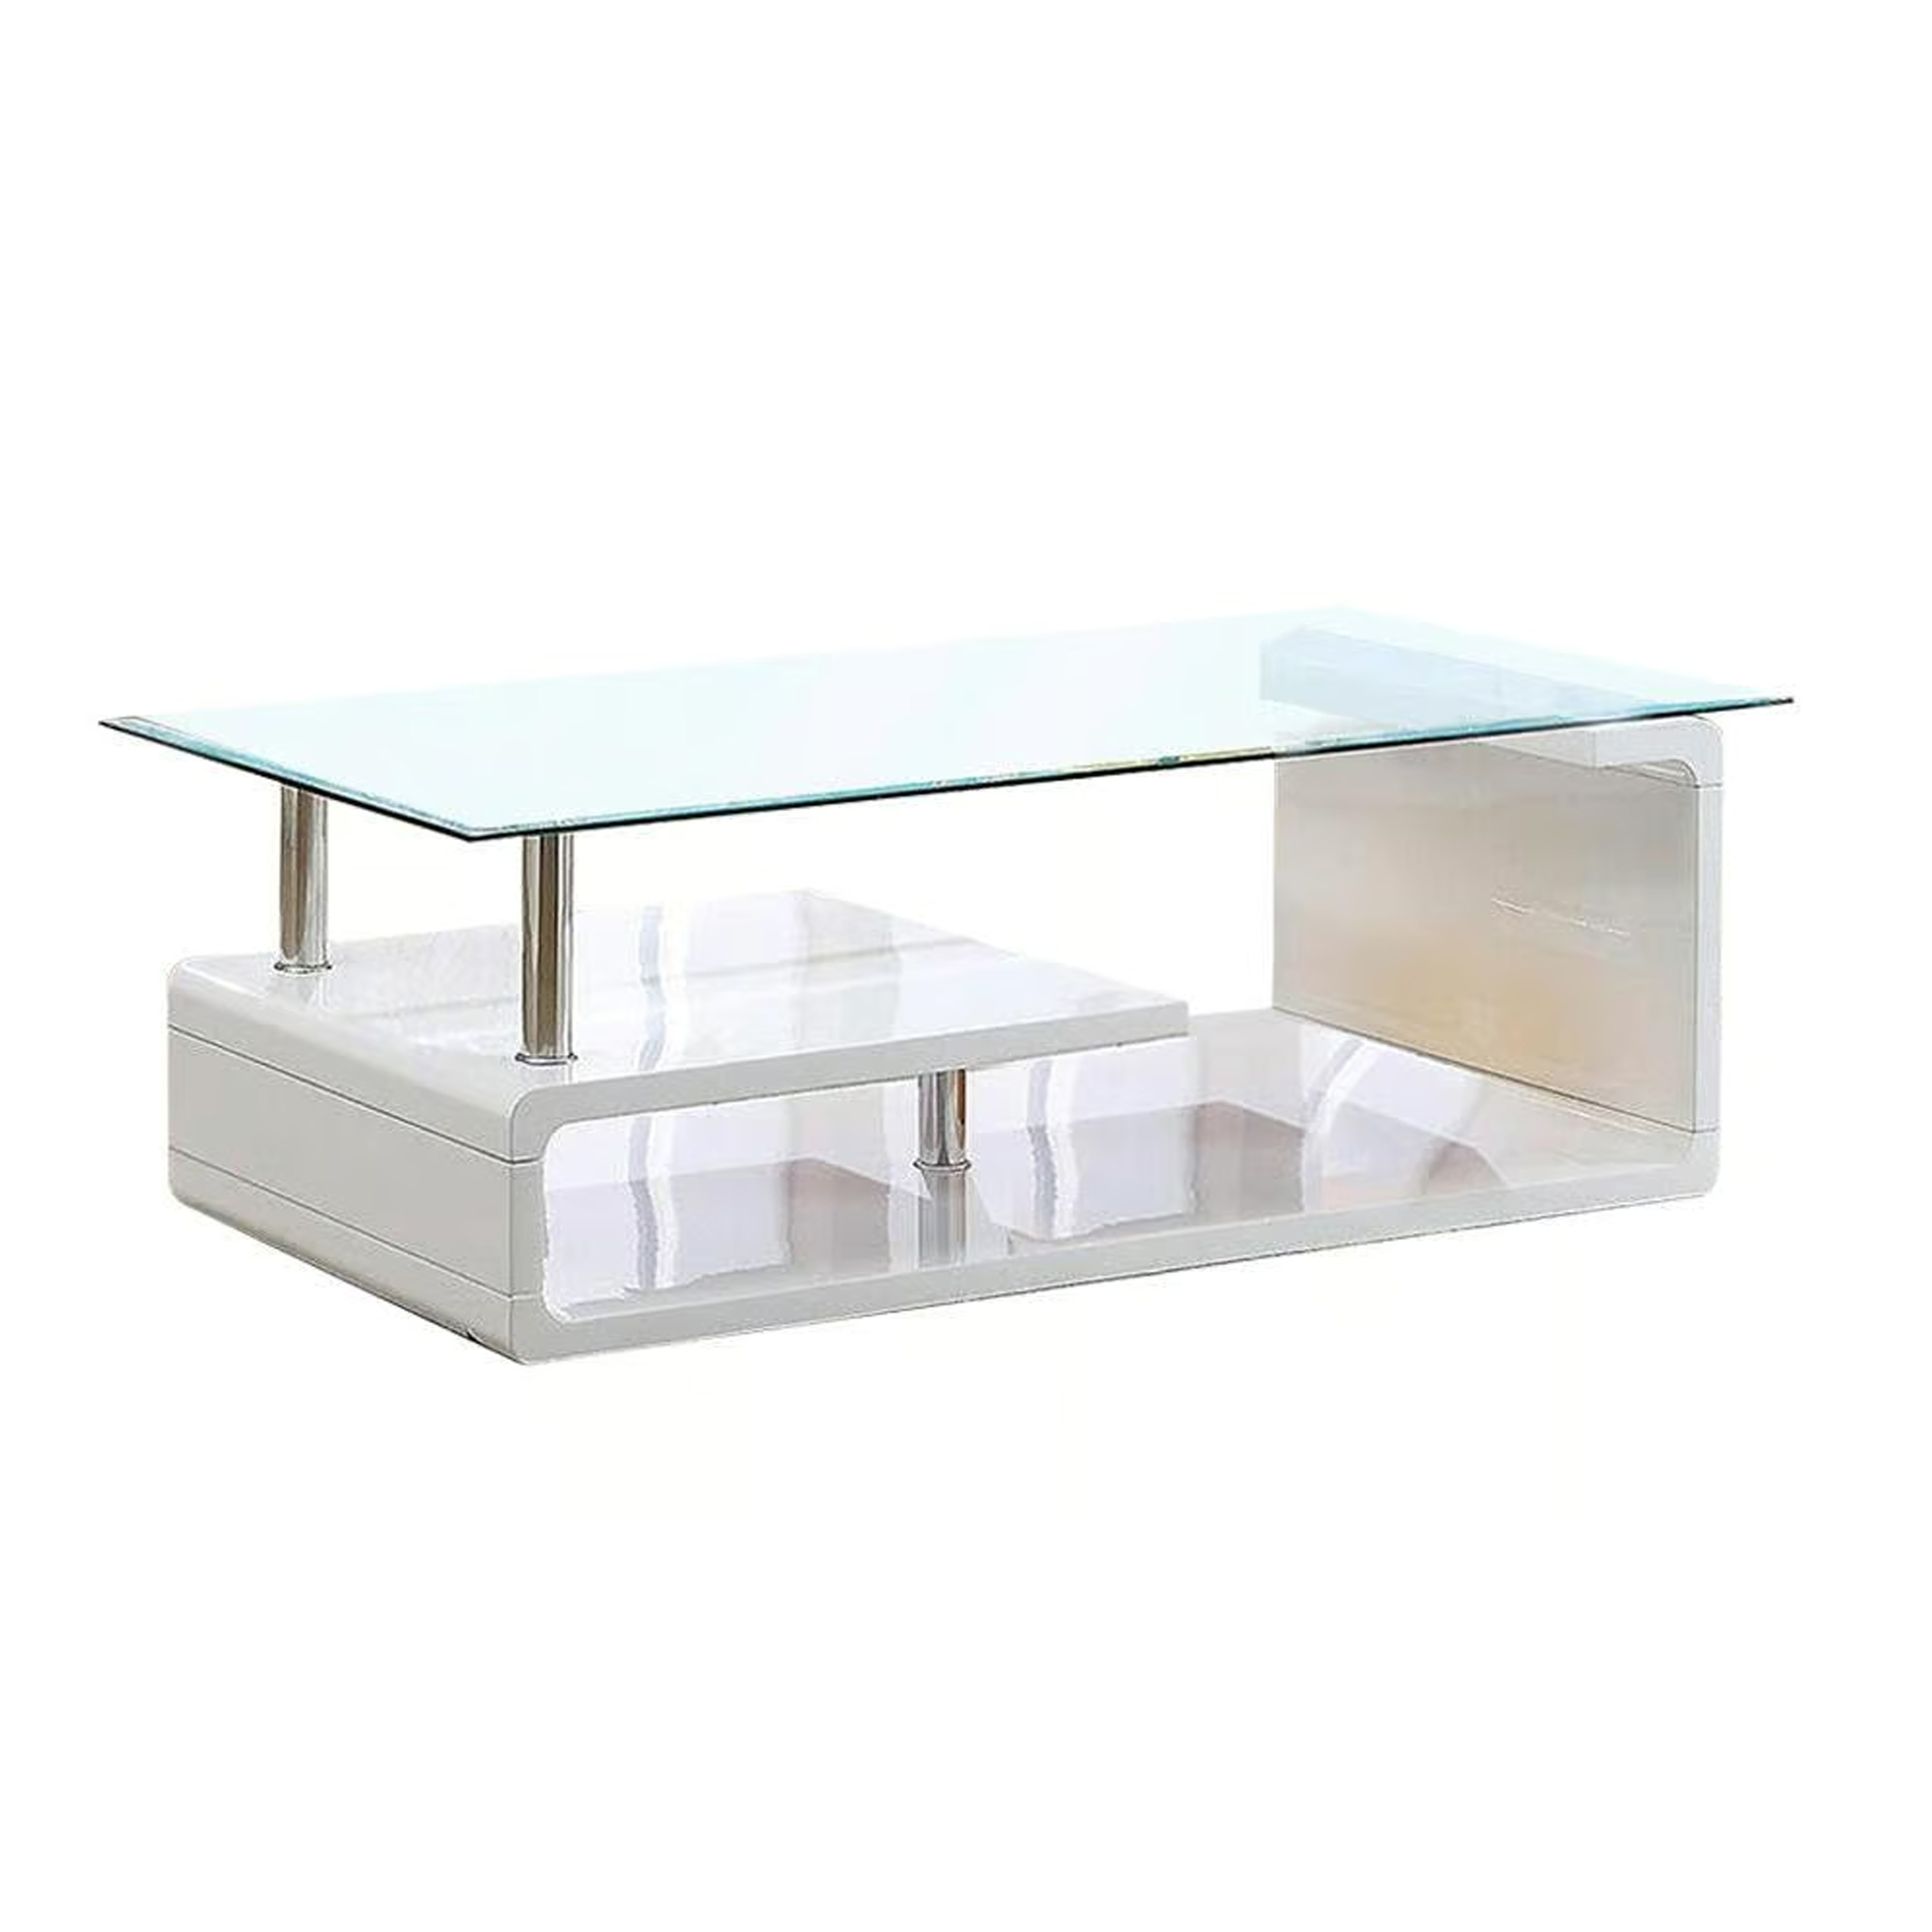 Contemporary Coffee Table With Multi Level Curled Open Shelf, White- Saltoro Sherpi